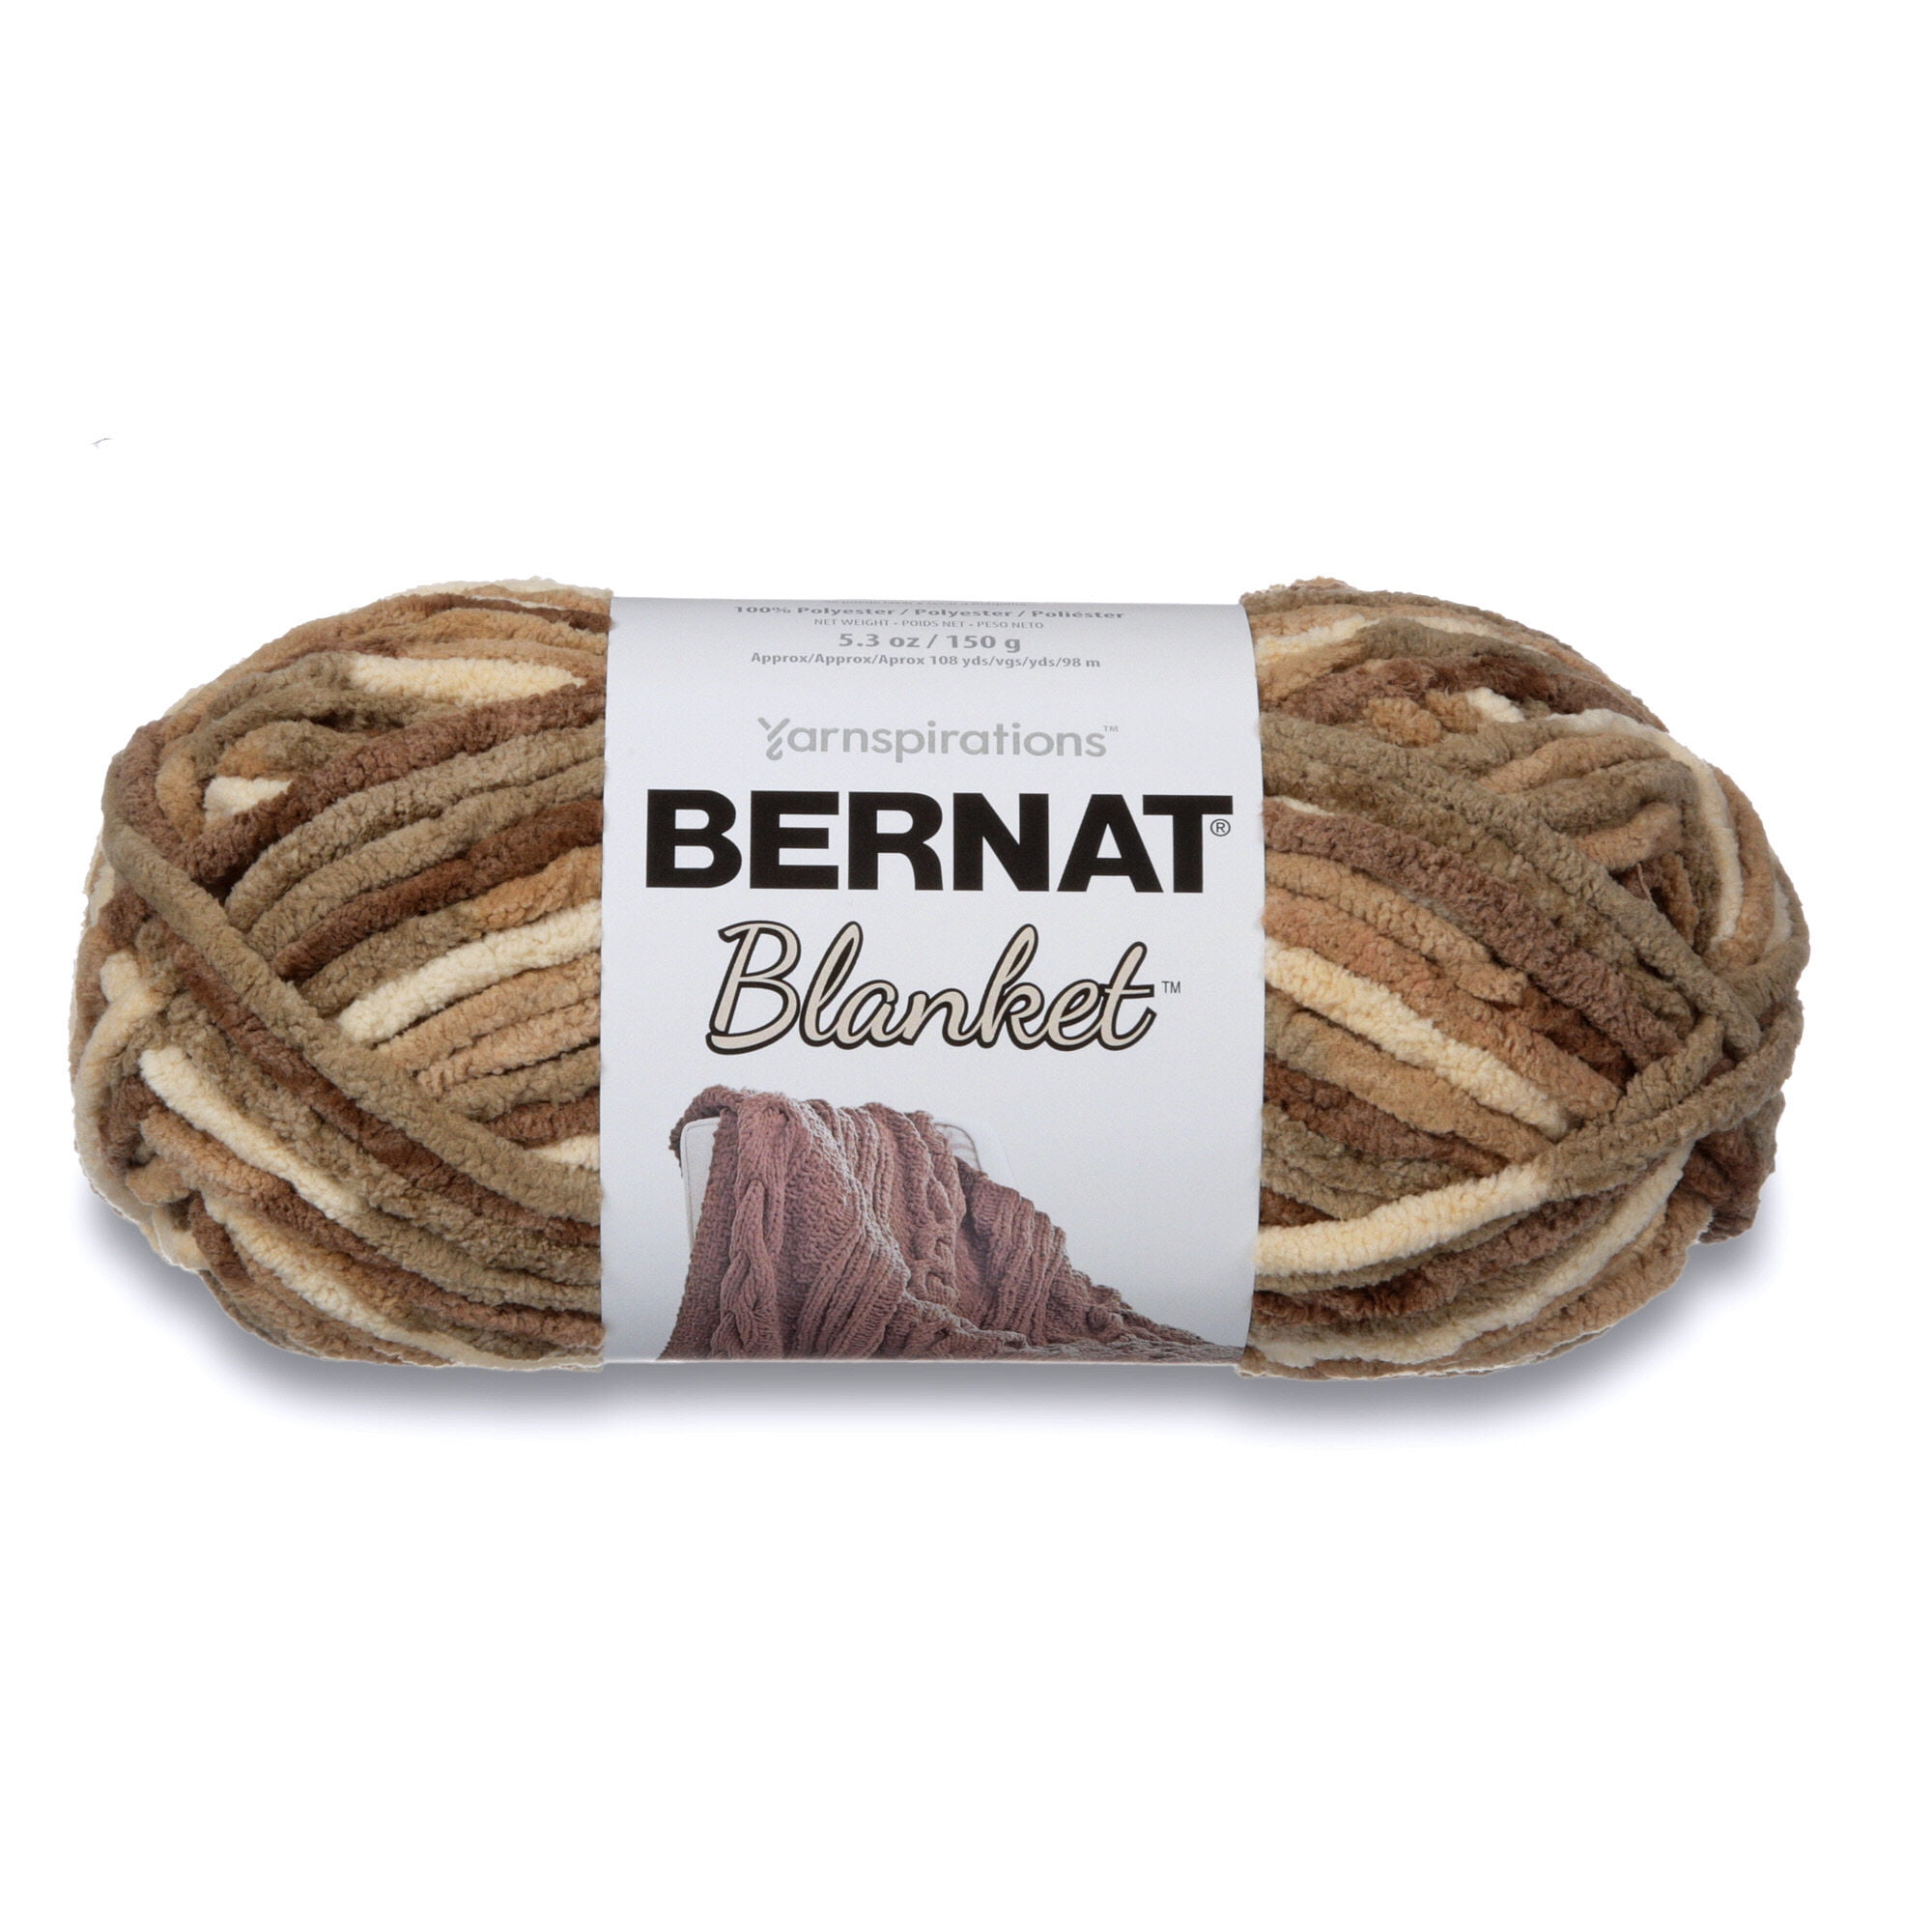 Bernat Blanket Yarn - Big Ball (10.5 oz) - 2 Pack with Patterns (Sonoma)